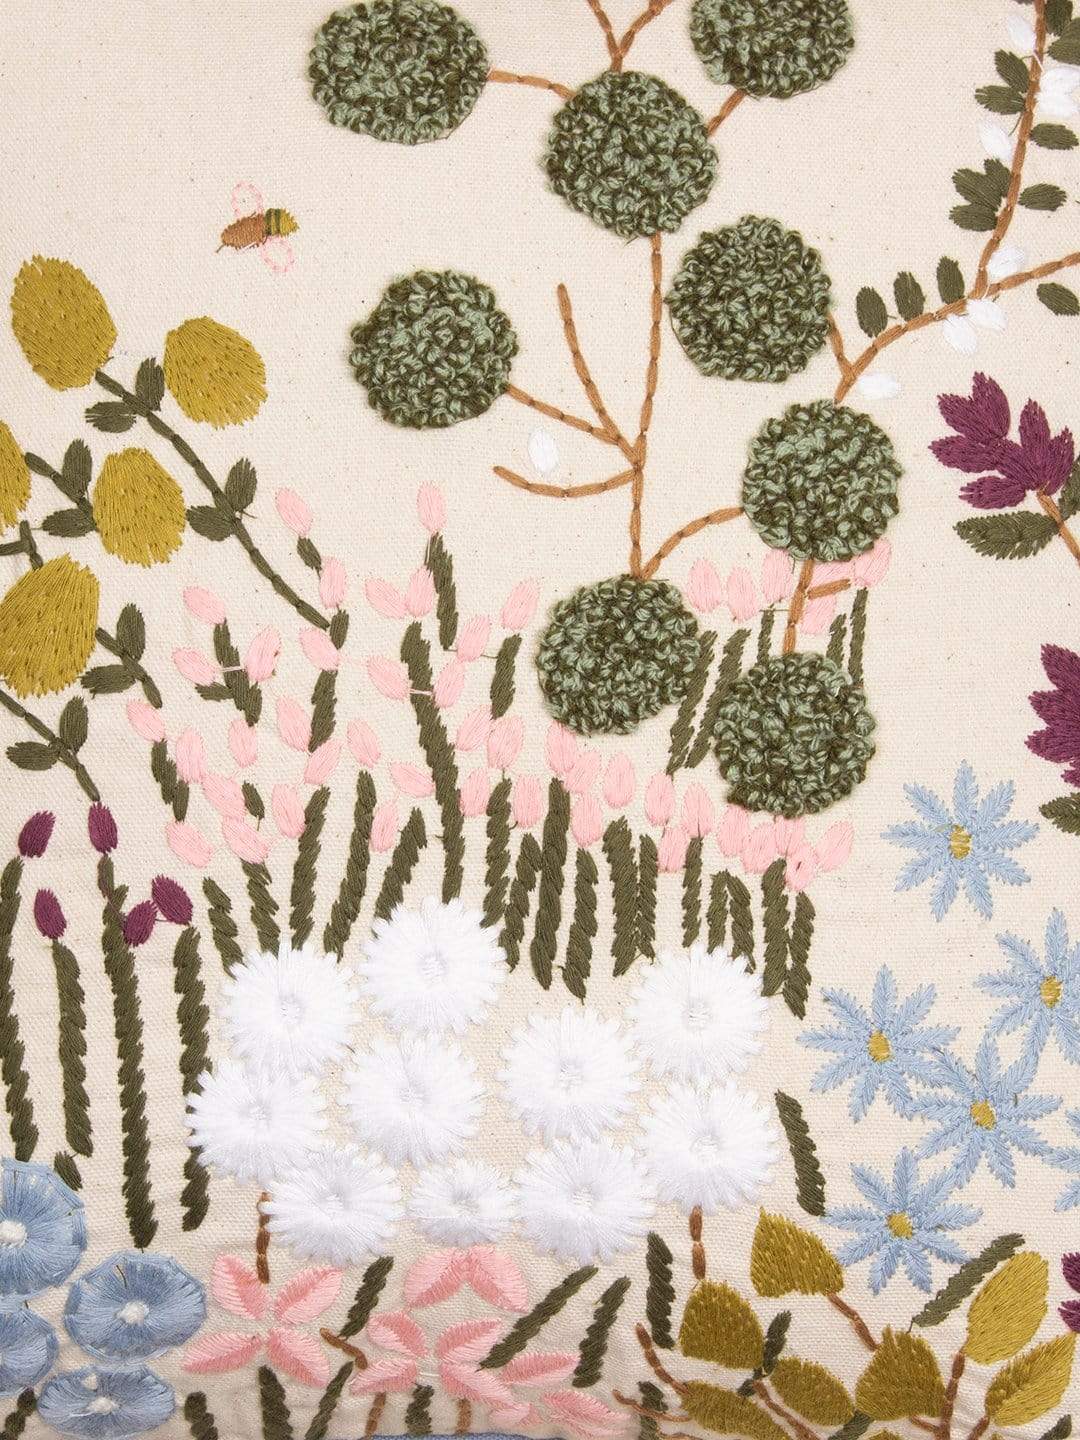 Gardenia Embroidered Cushion Cover